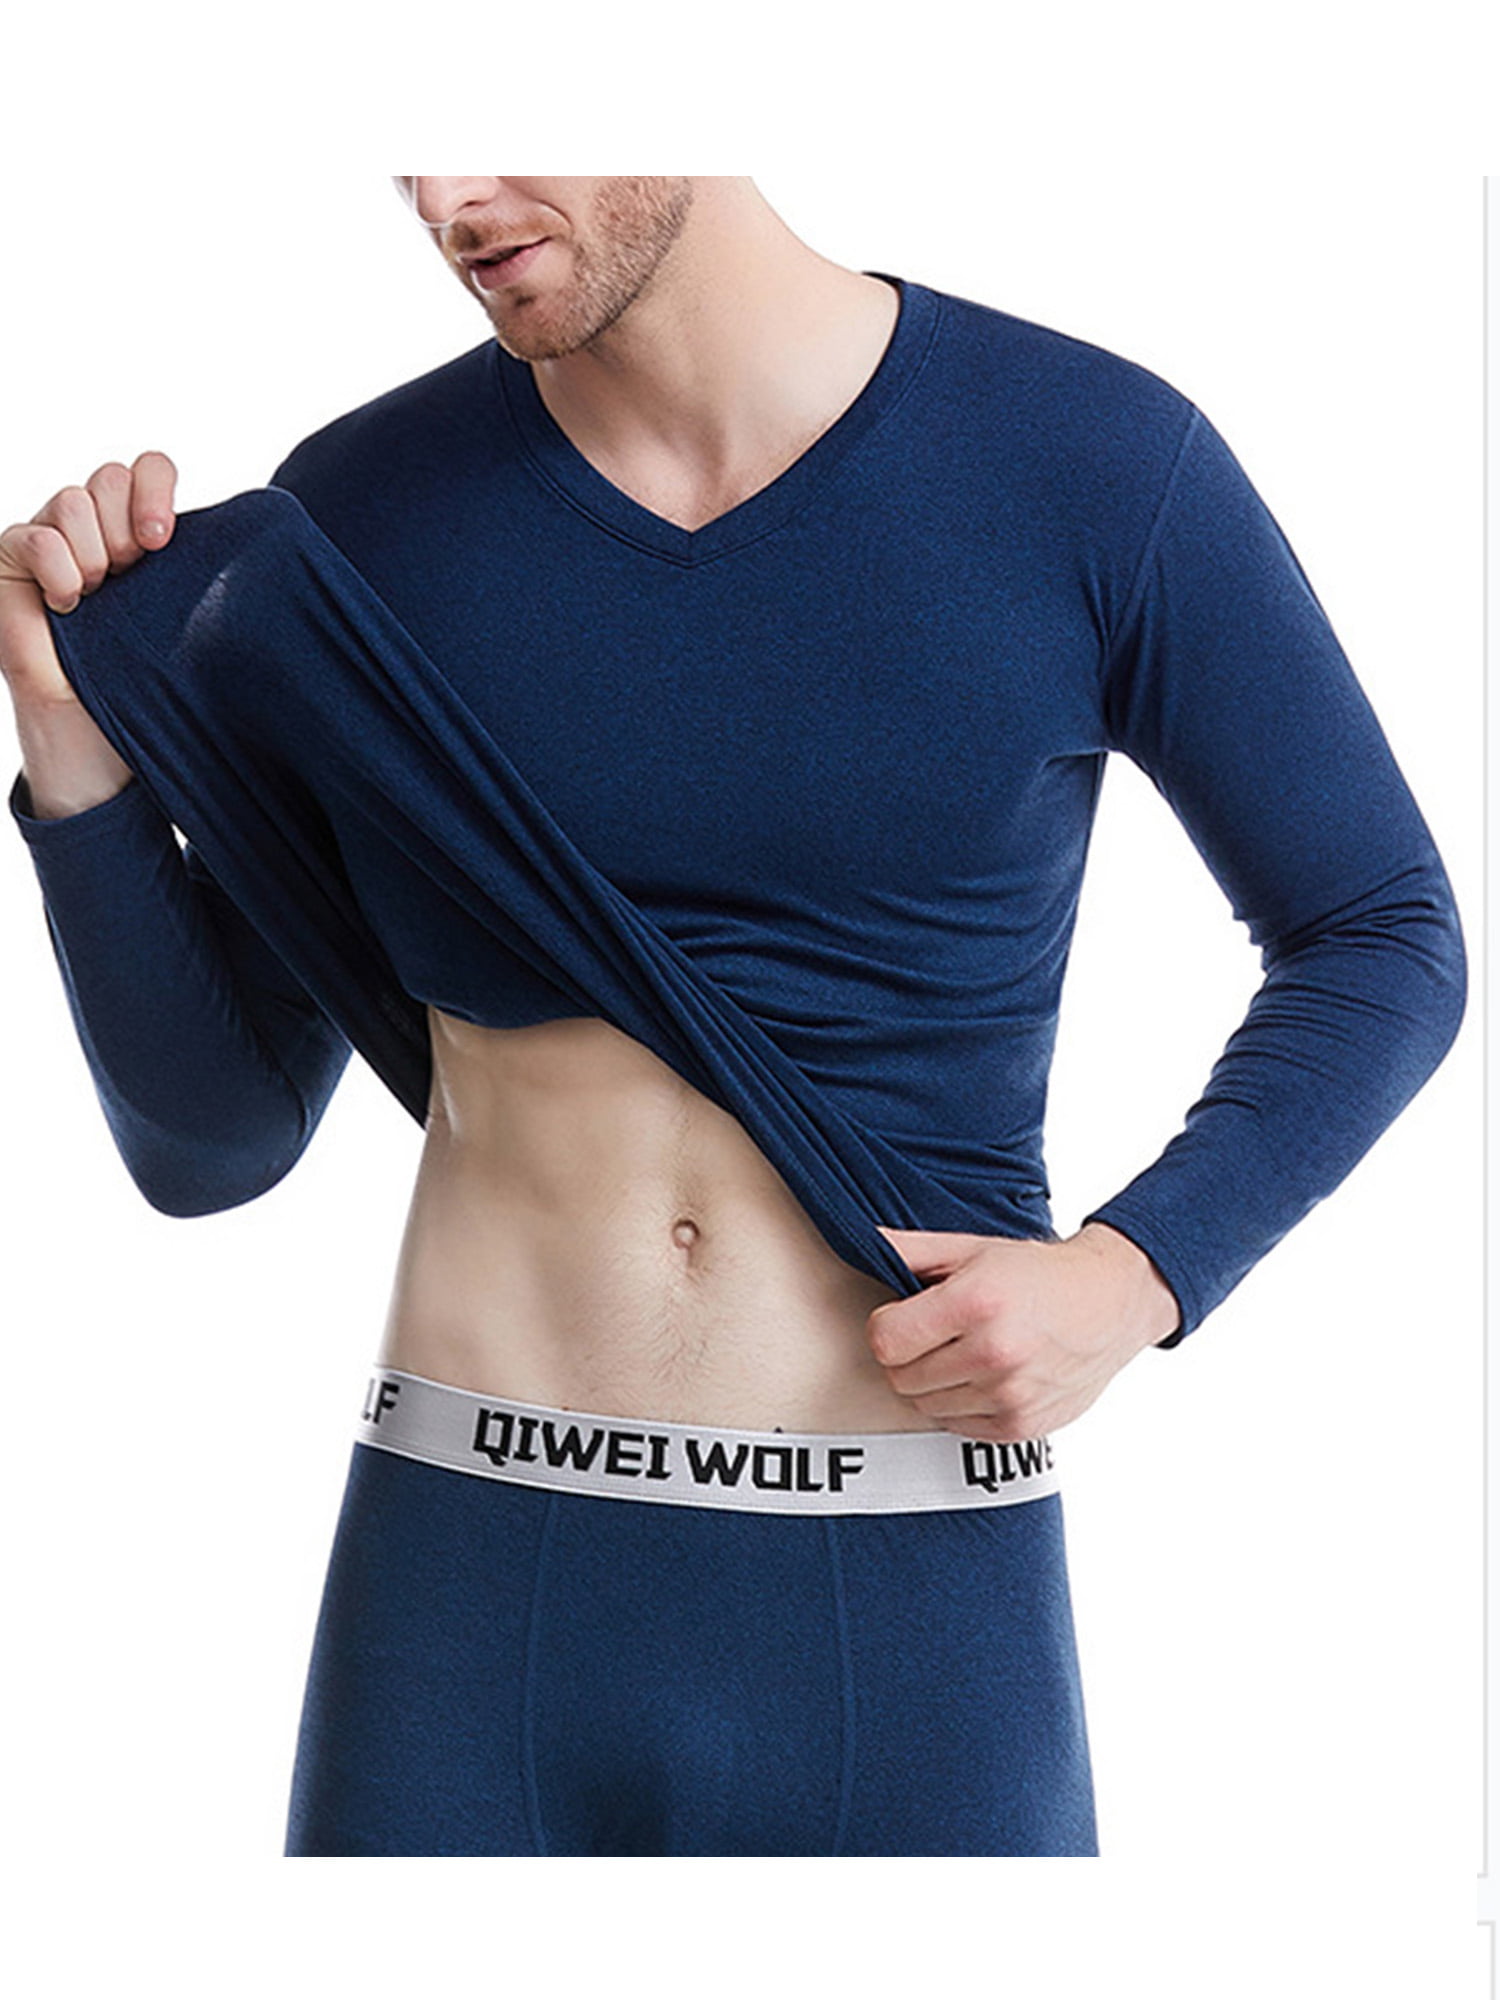 COOLOMG Mens Thermal Set Fleece Lined Compression Pants+Shirt Warm Baselayer Series 